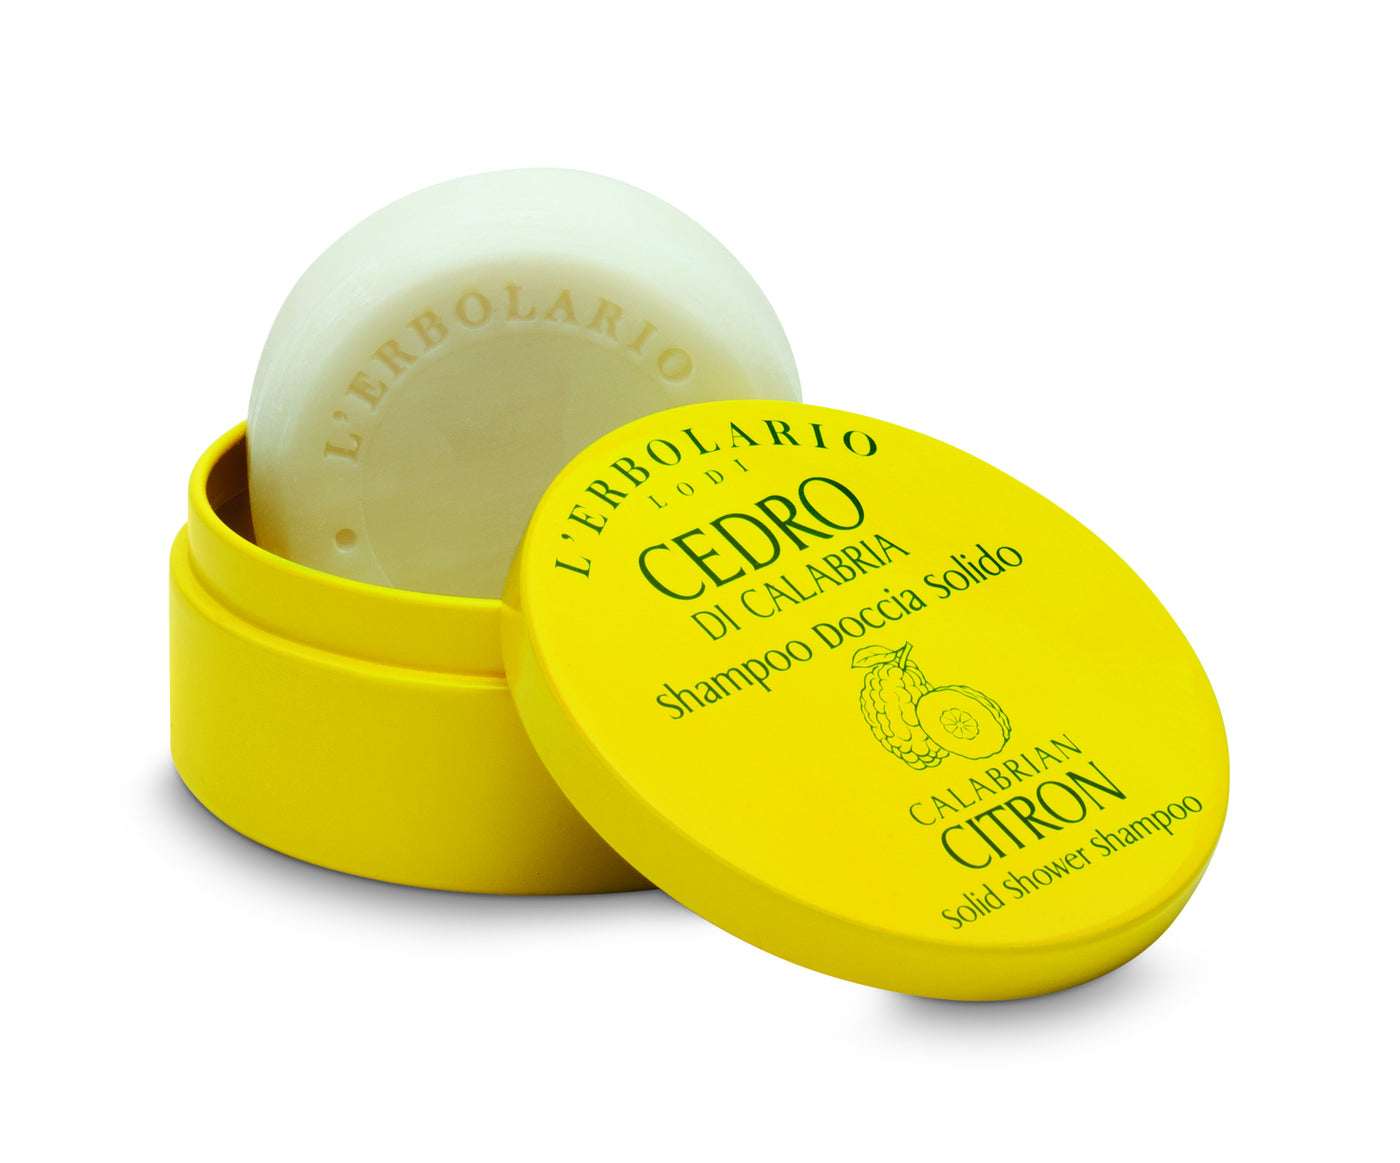 Calabrian Citron Solid Shower Shampoo 60g Limit edit -  organic-lab-my.myshopify.com